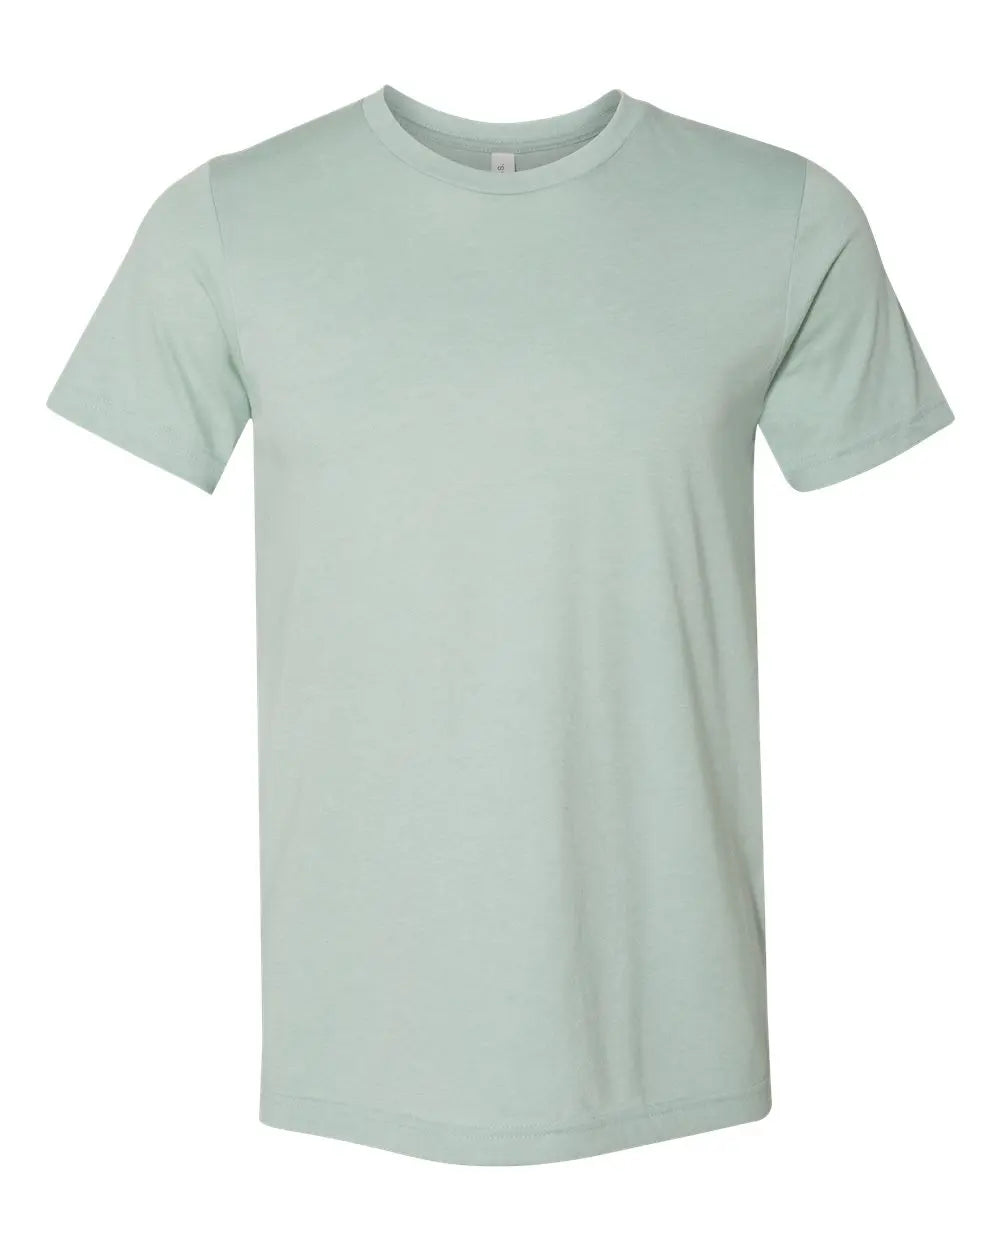 Blank Bella Canvas 3001CVC Unisex T-Shirt - MOST POPULAR